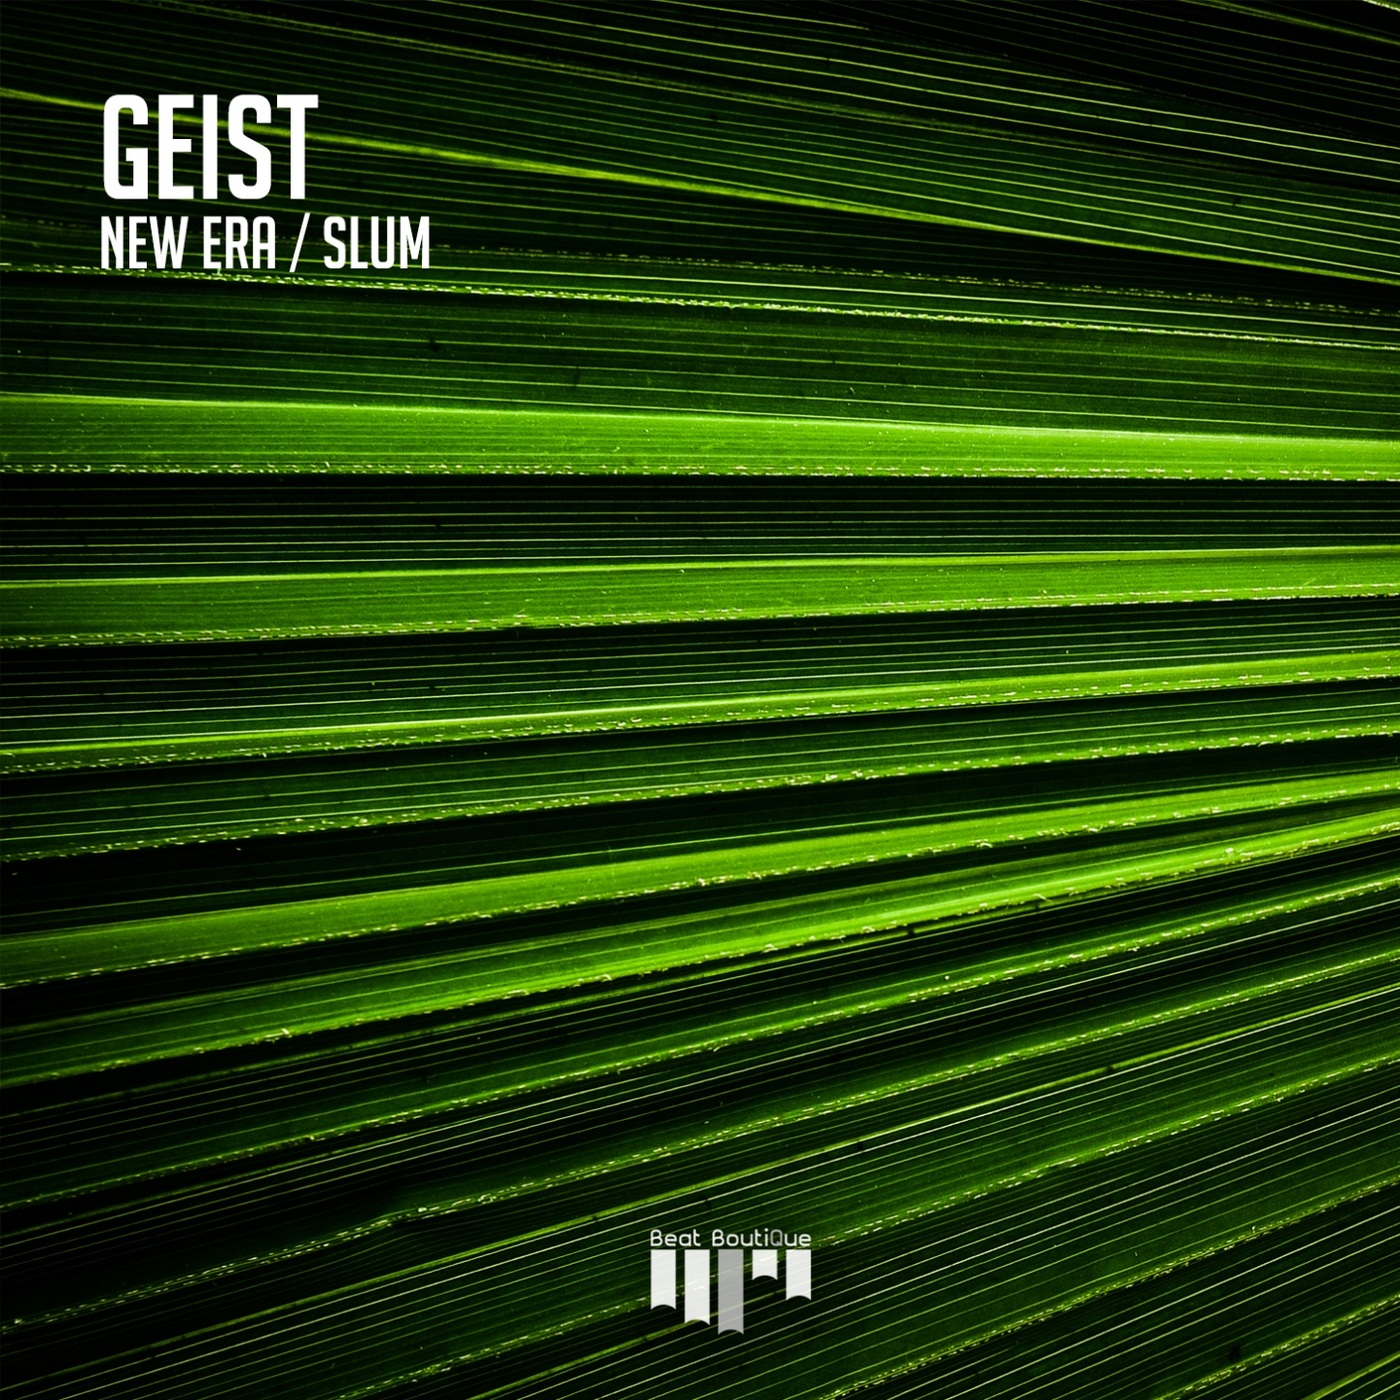 Geist - New Era / Slum / Beat Boutique